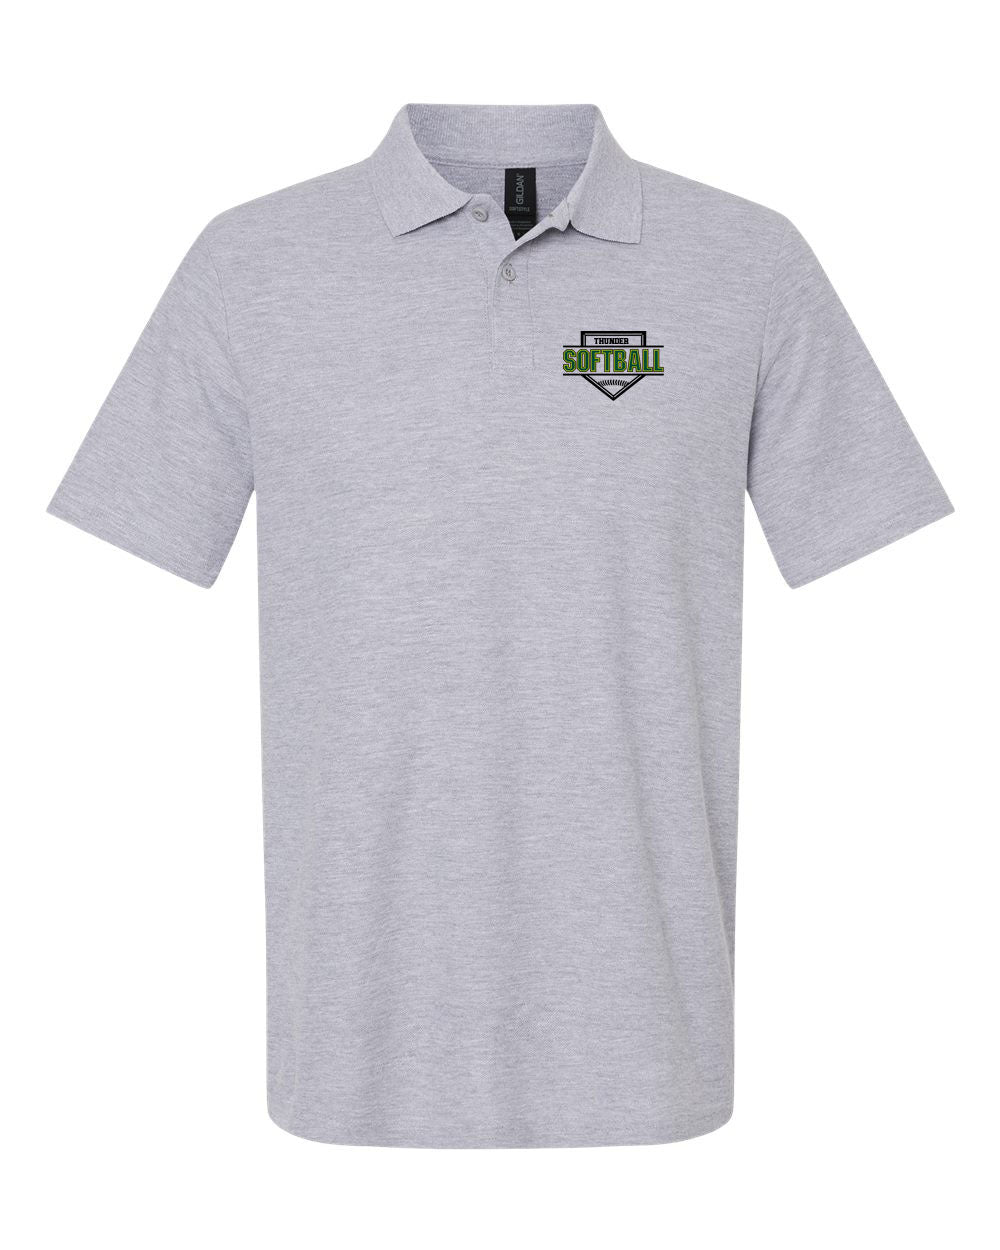 Green Thunder design 1 Polo T-Shirt